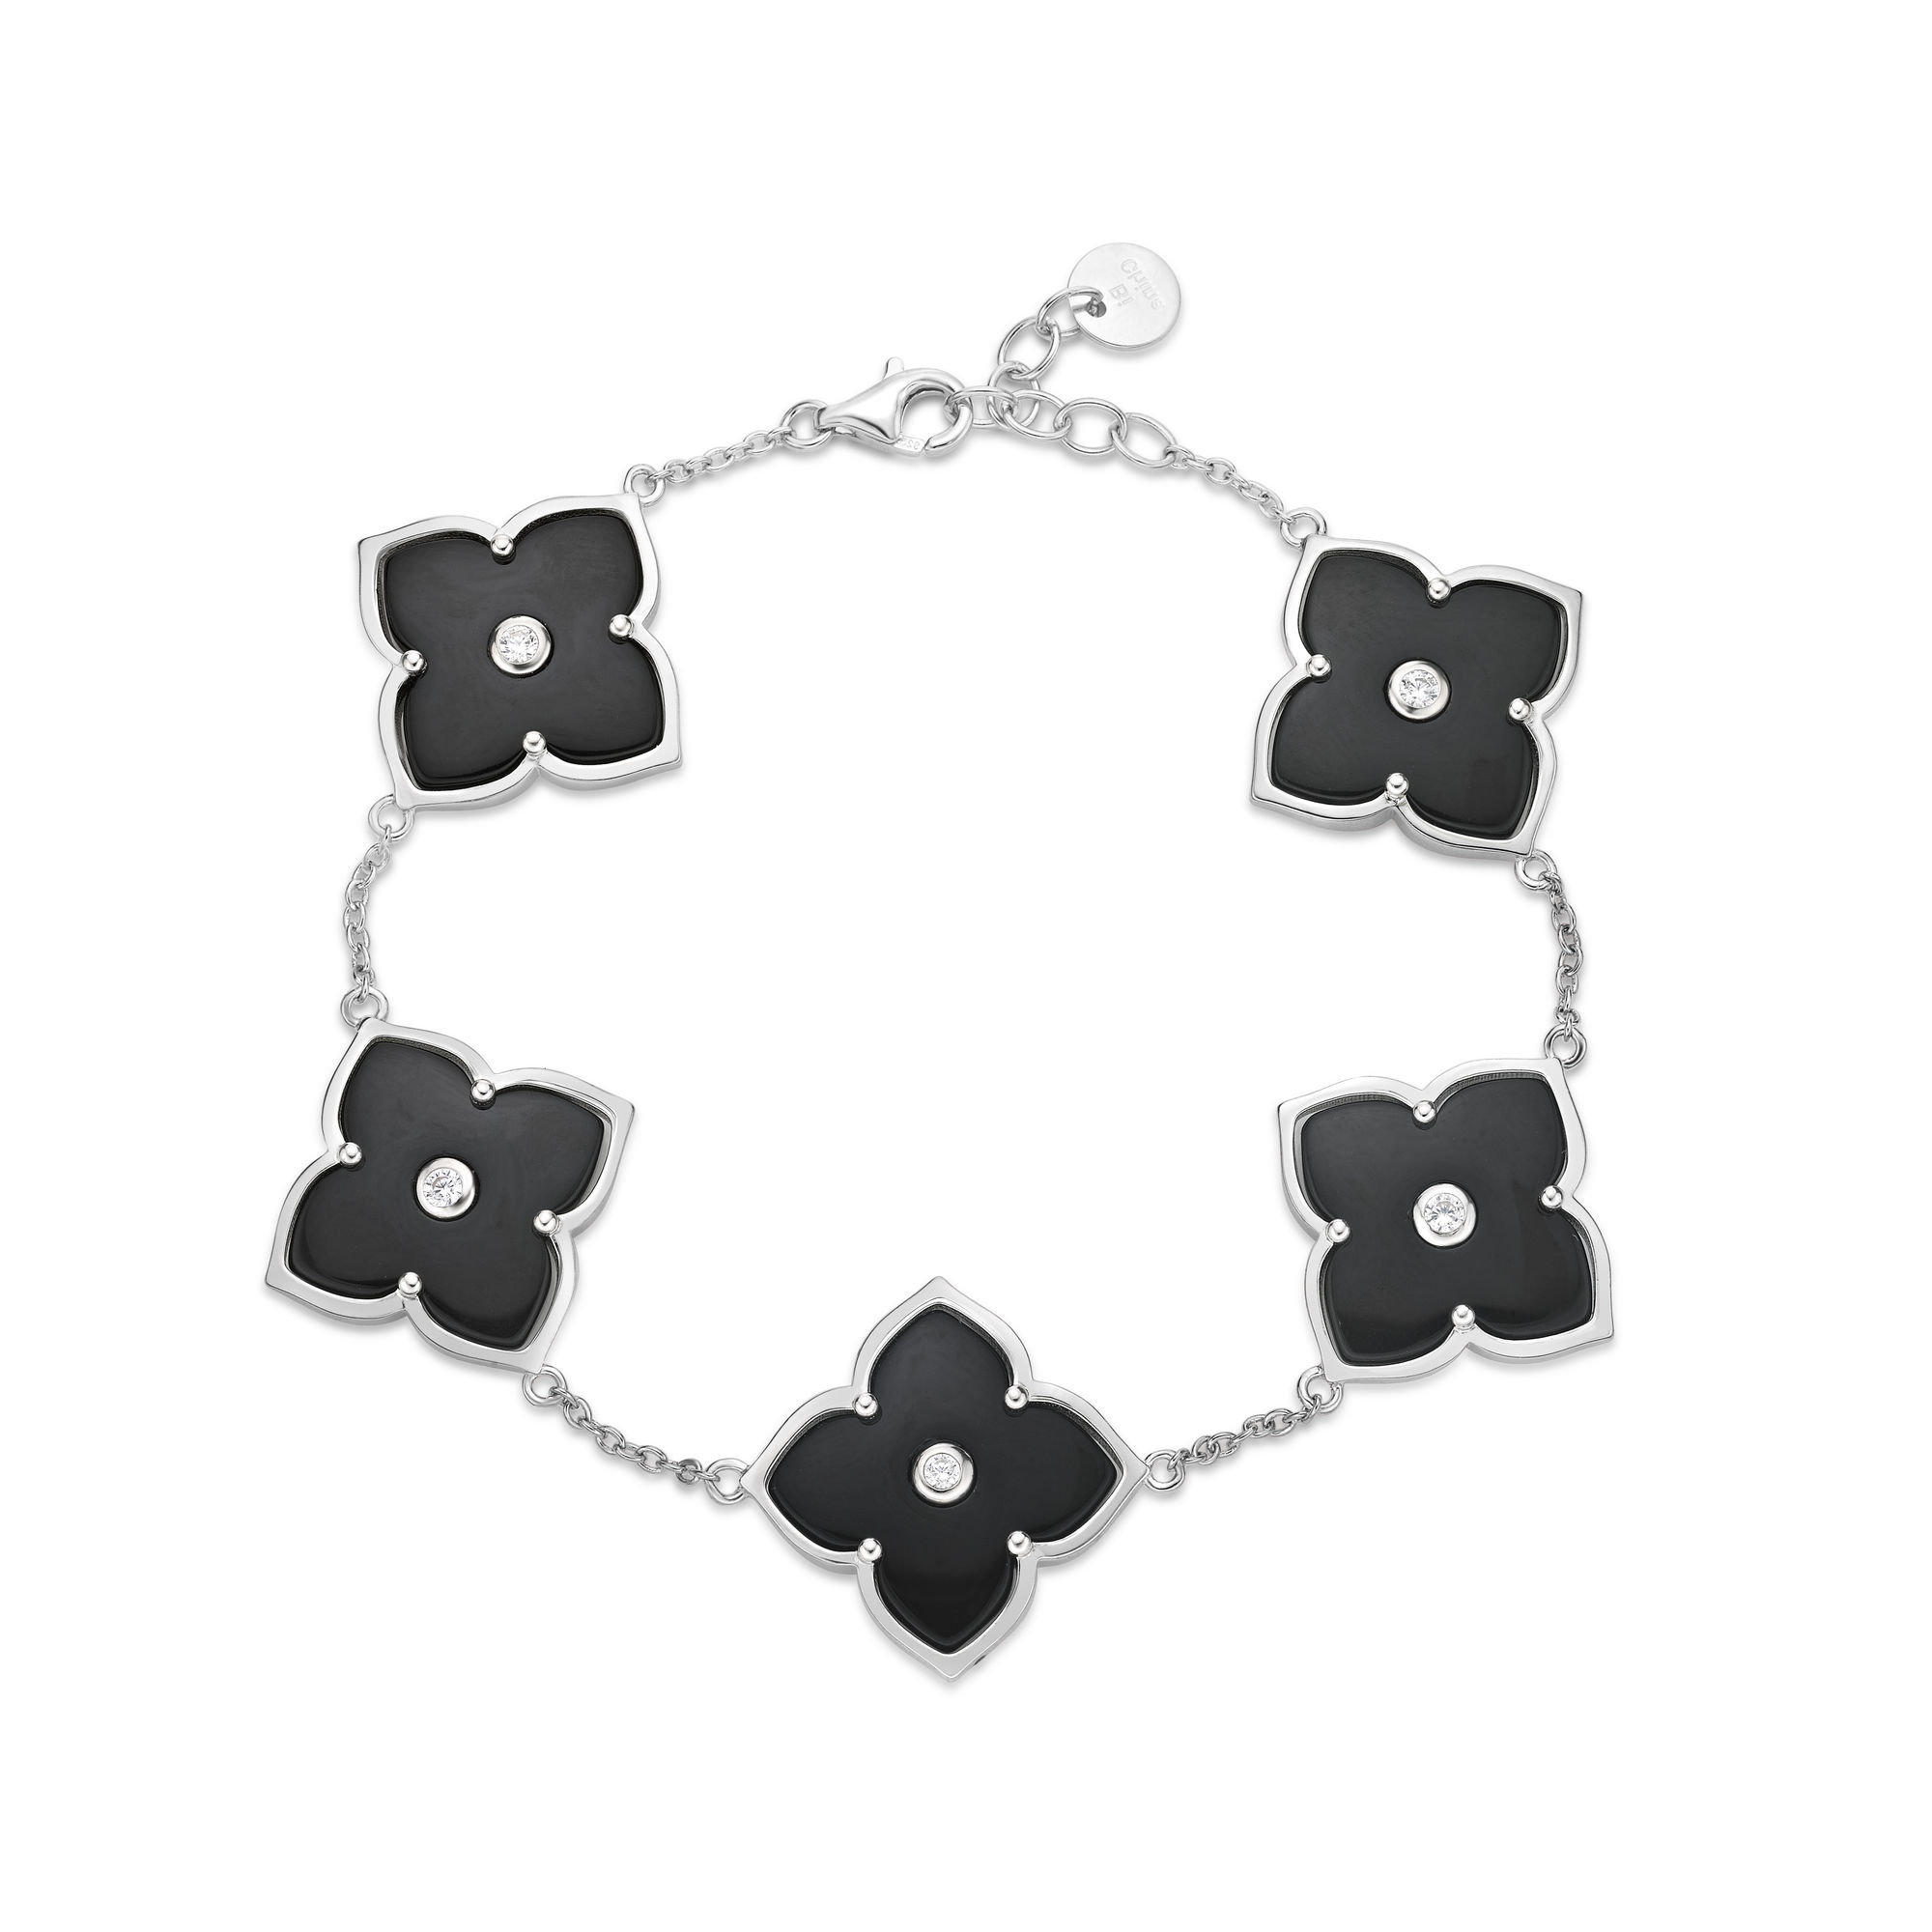 48778-bracelet-fashion-jewelry-sterling-silver-cubic-zirconia-round-1mm-black-onyx-48778.jpg